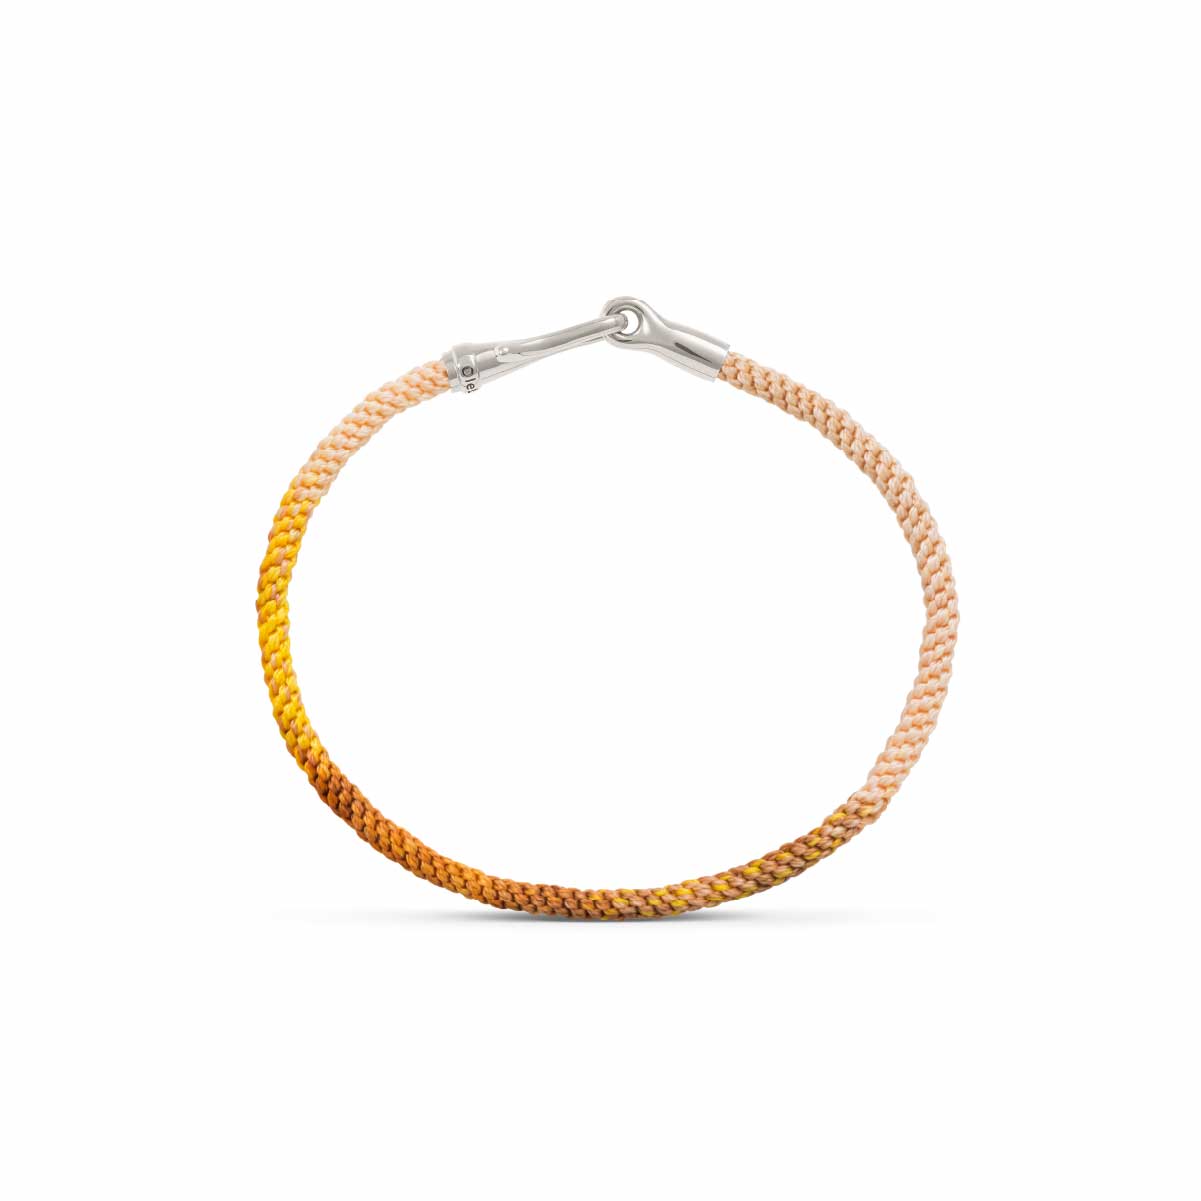 OLE LYNGGAARD Love Bracelet 18 karat yellow and rose gold - Bonebakker shop